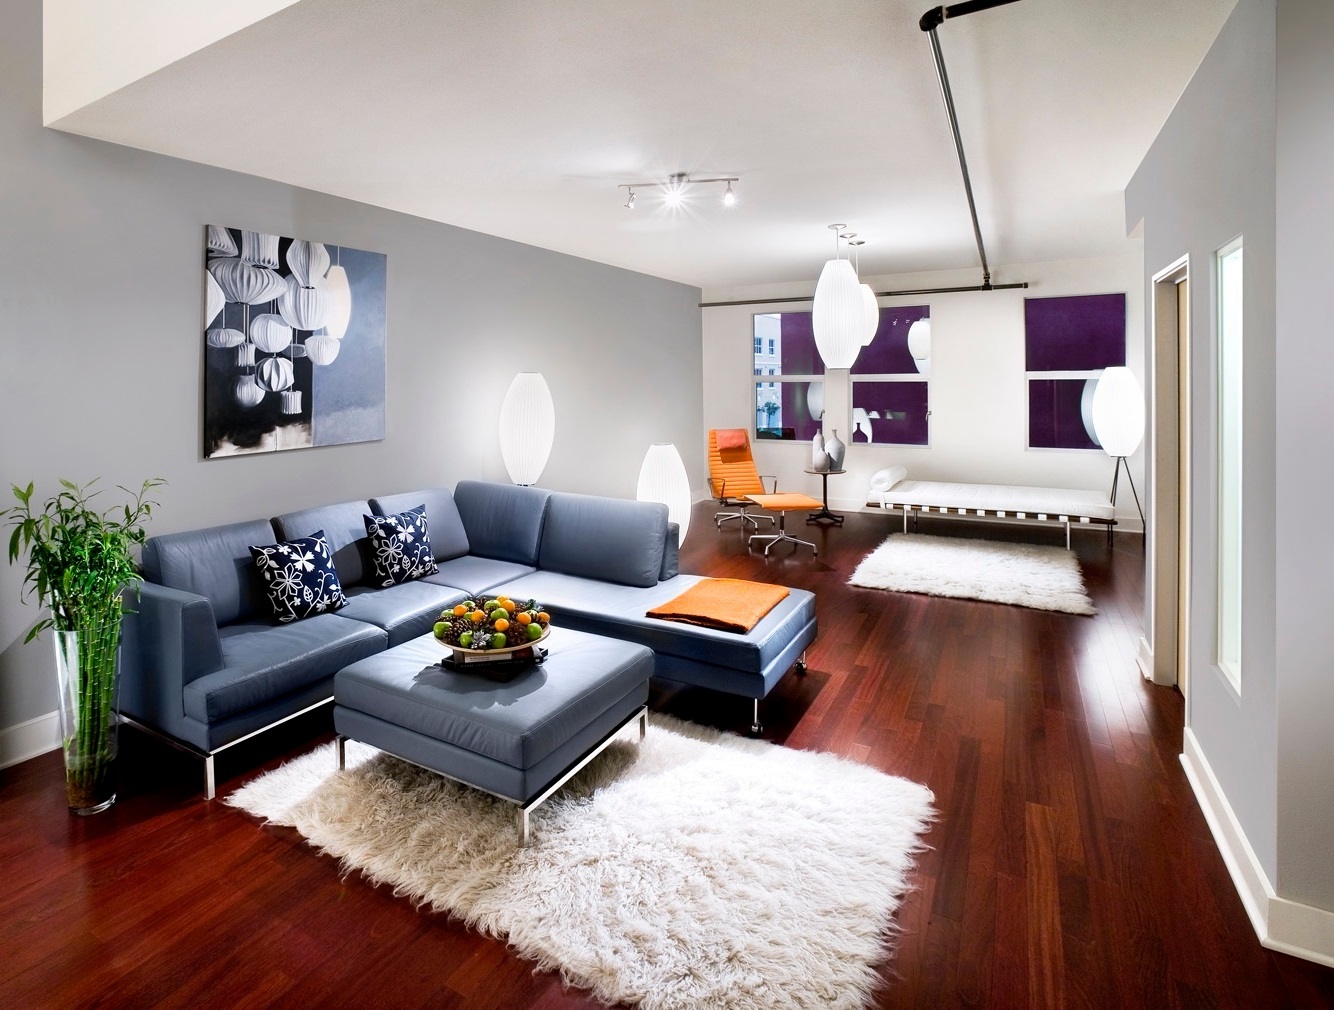 Living Room Design Ideas & Tips - Abr Home Amazing